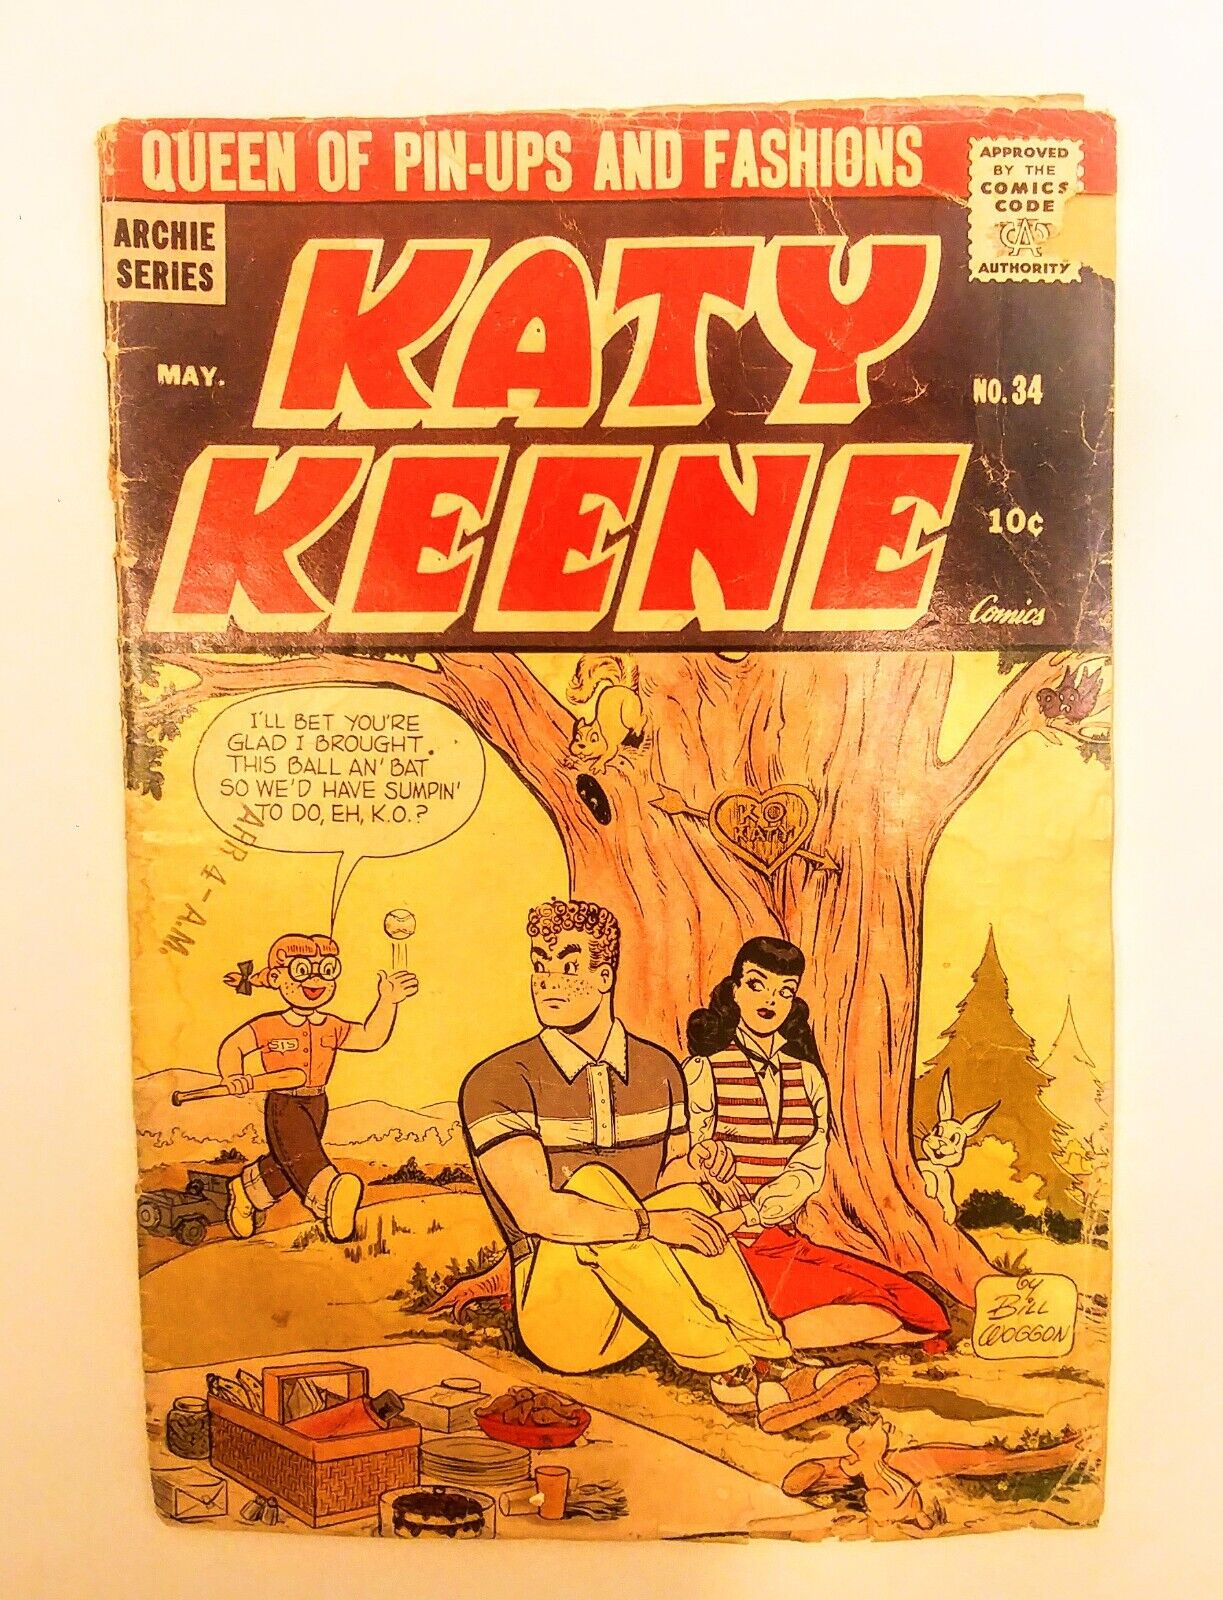 1957 KATIE KEENE COMIC BOOK GOOD CONDITION. ALMOST GOLDEN AGE 